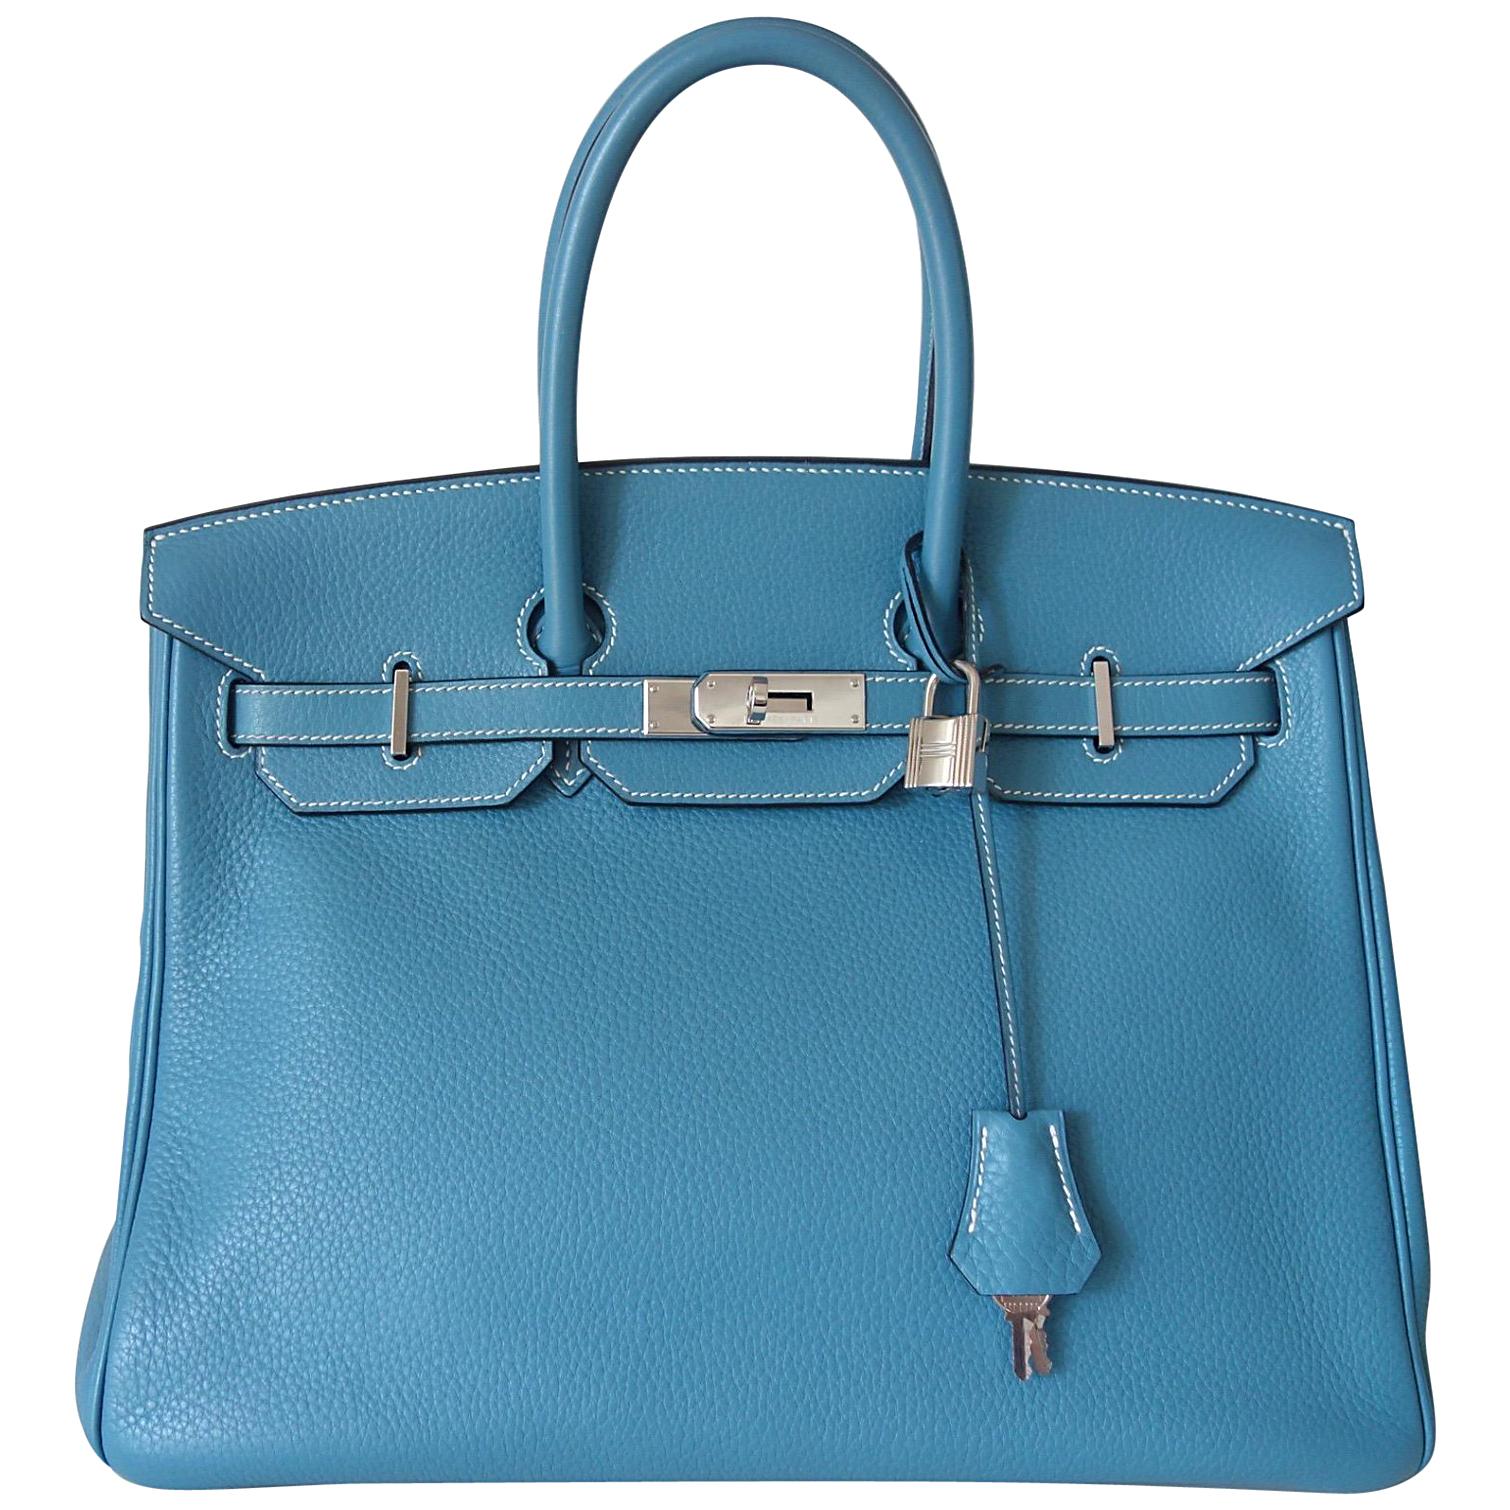 Hermès Taurillon Clemence Bleu Jean PHW 35 cm Birkin Top Handle Bag